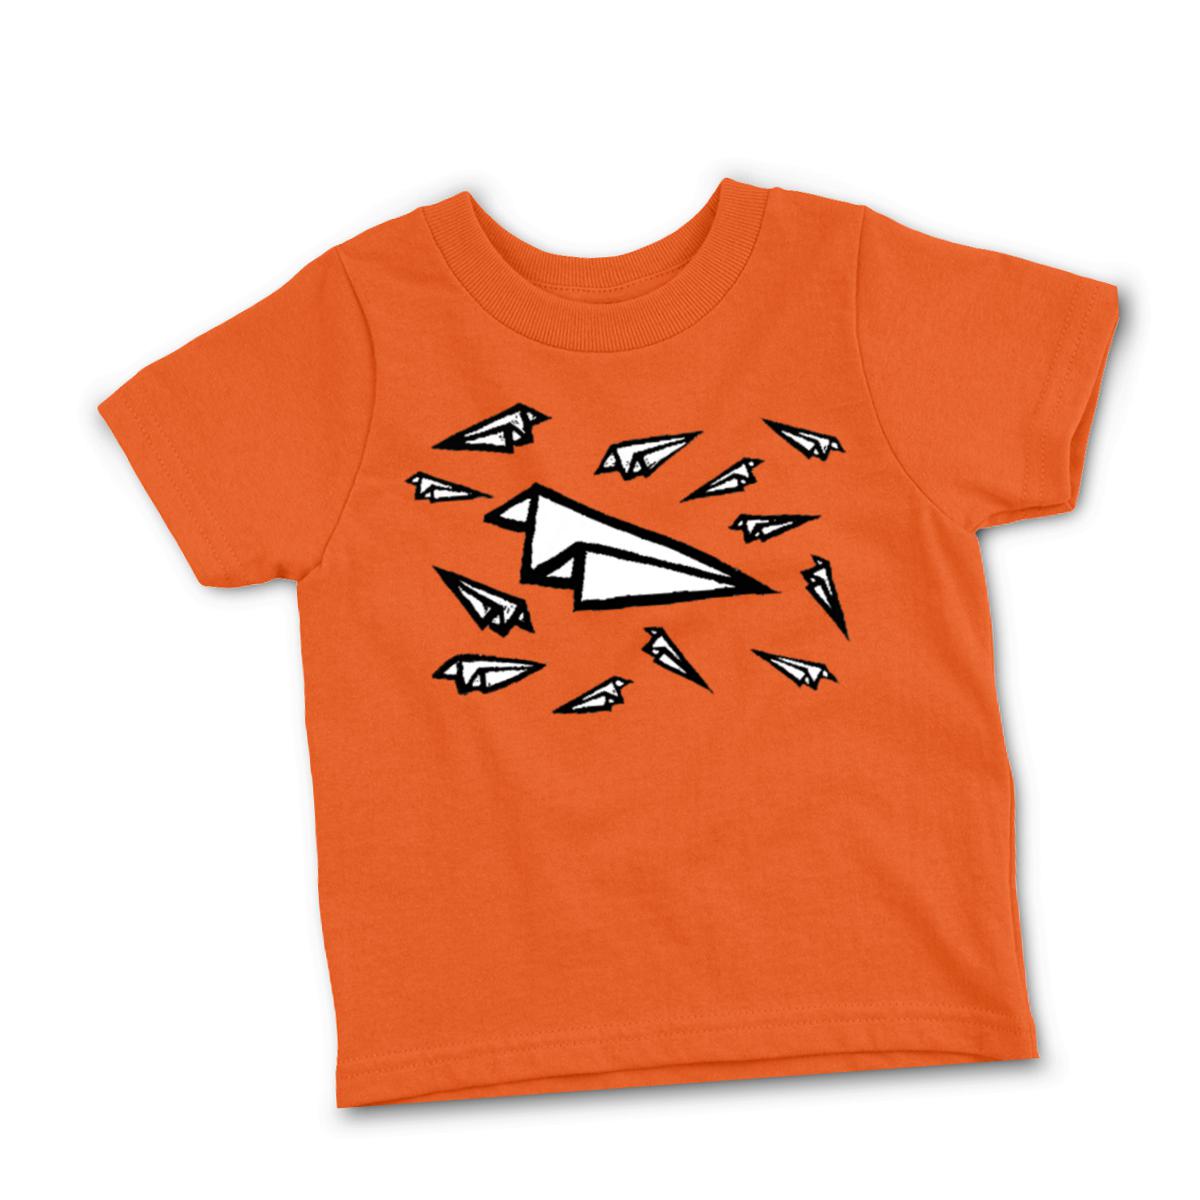 Airplane Frenzy Toddler Tee 2T orange